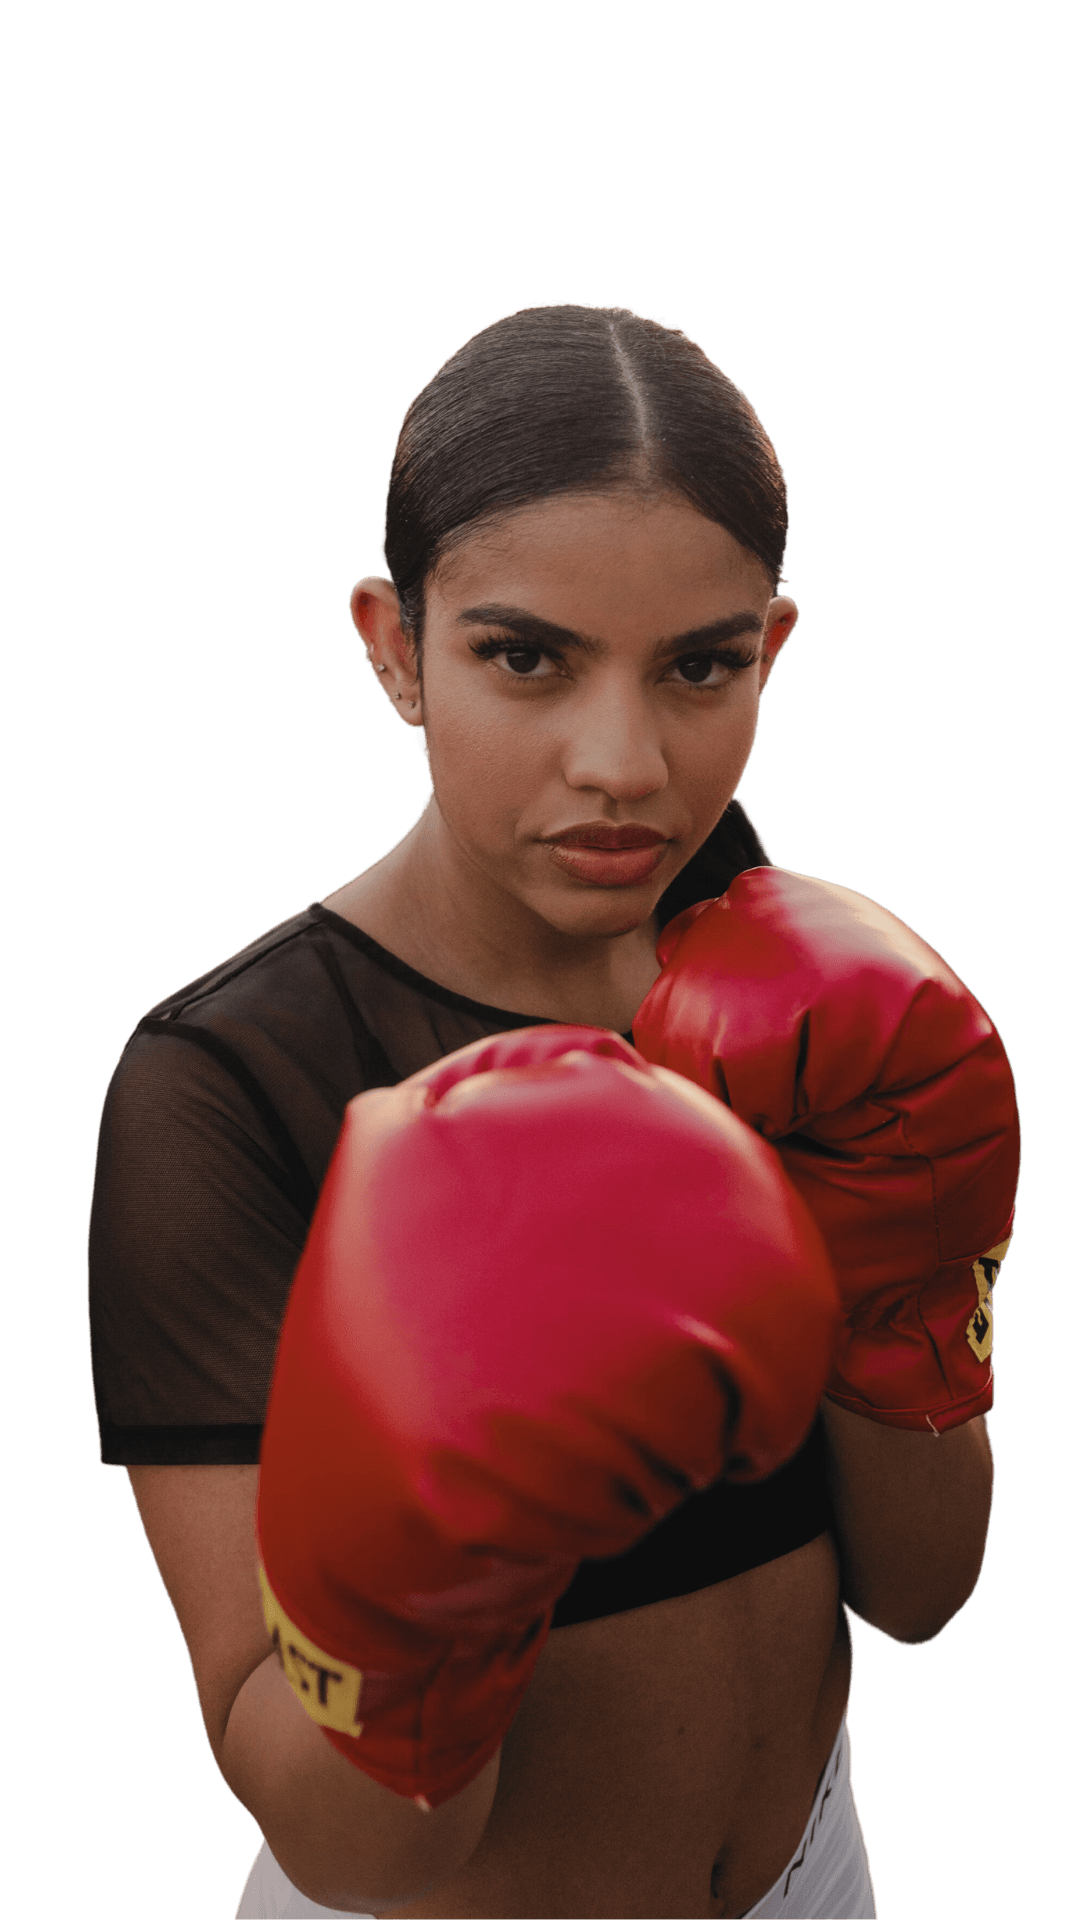 Femme boxer wearing red gloves